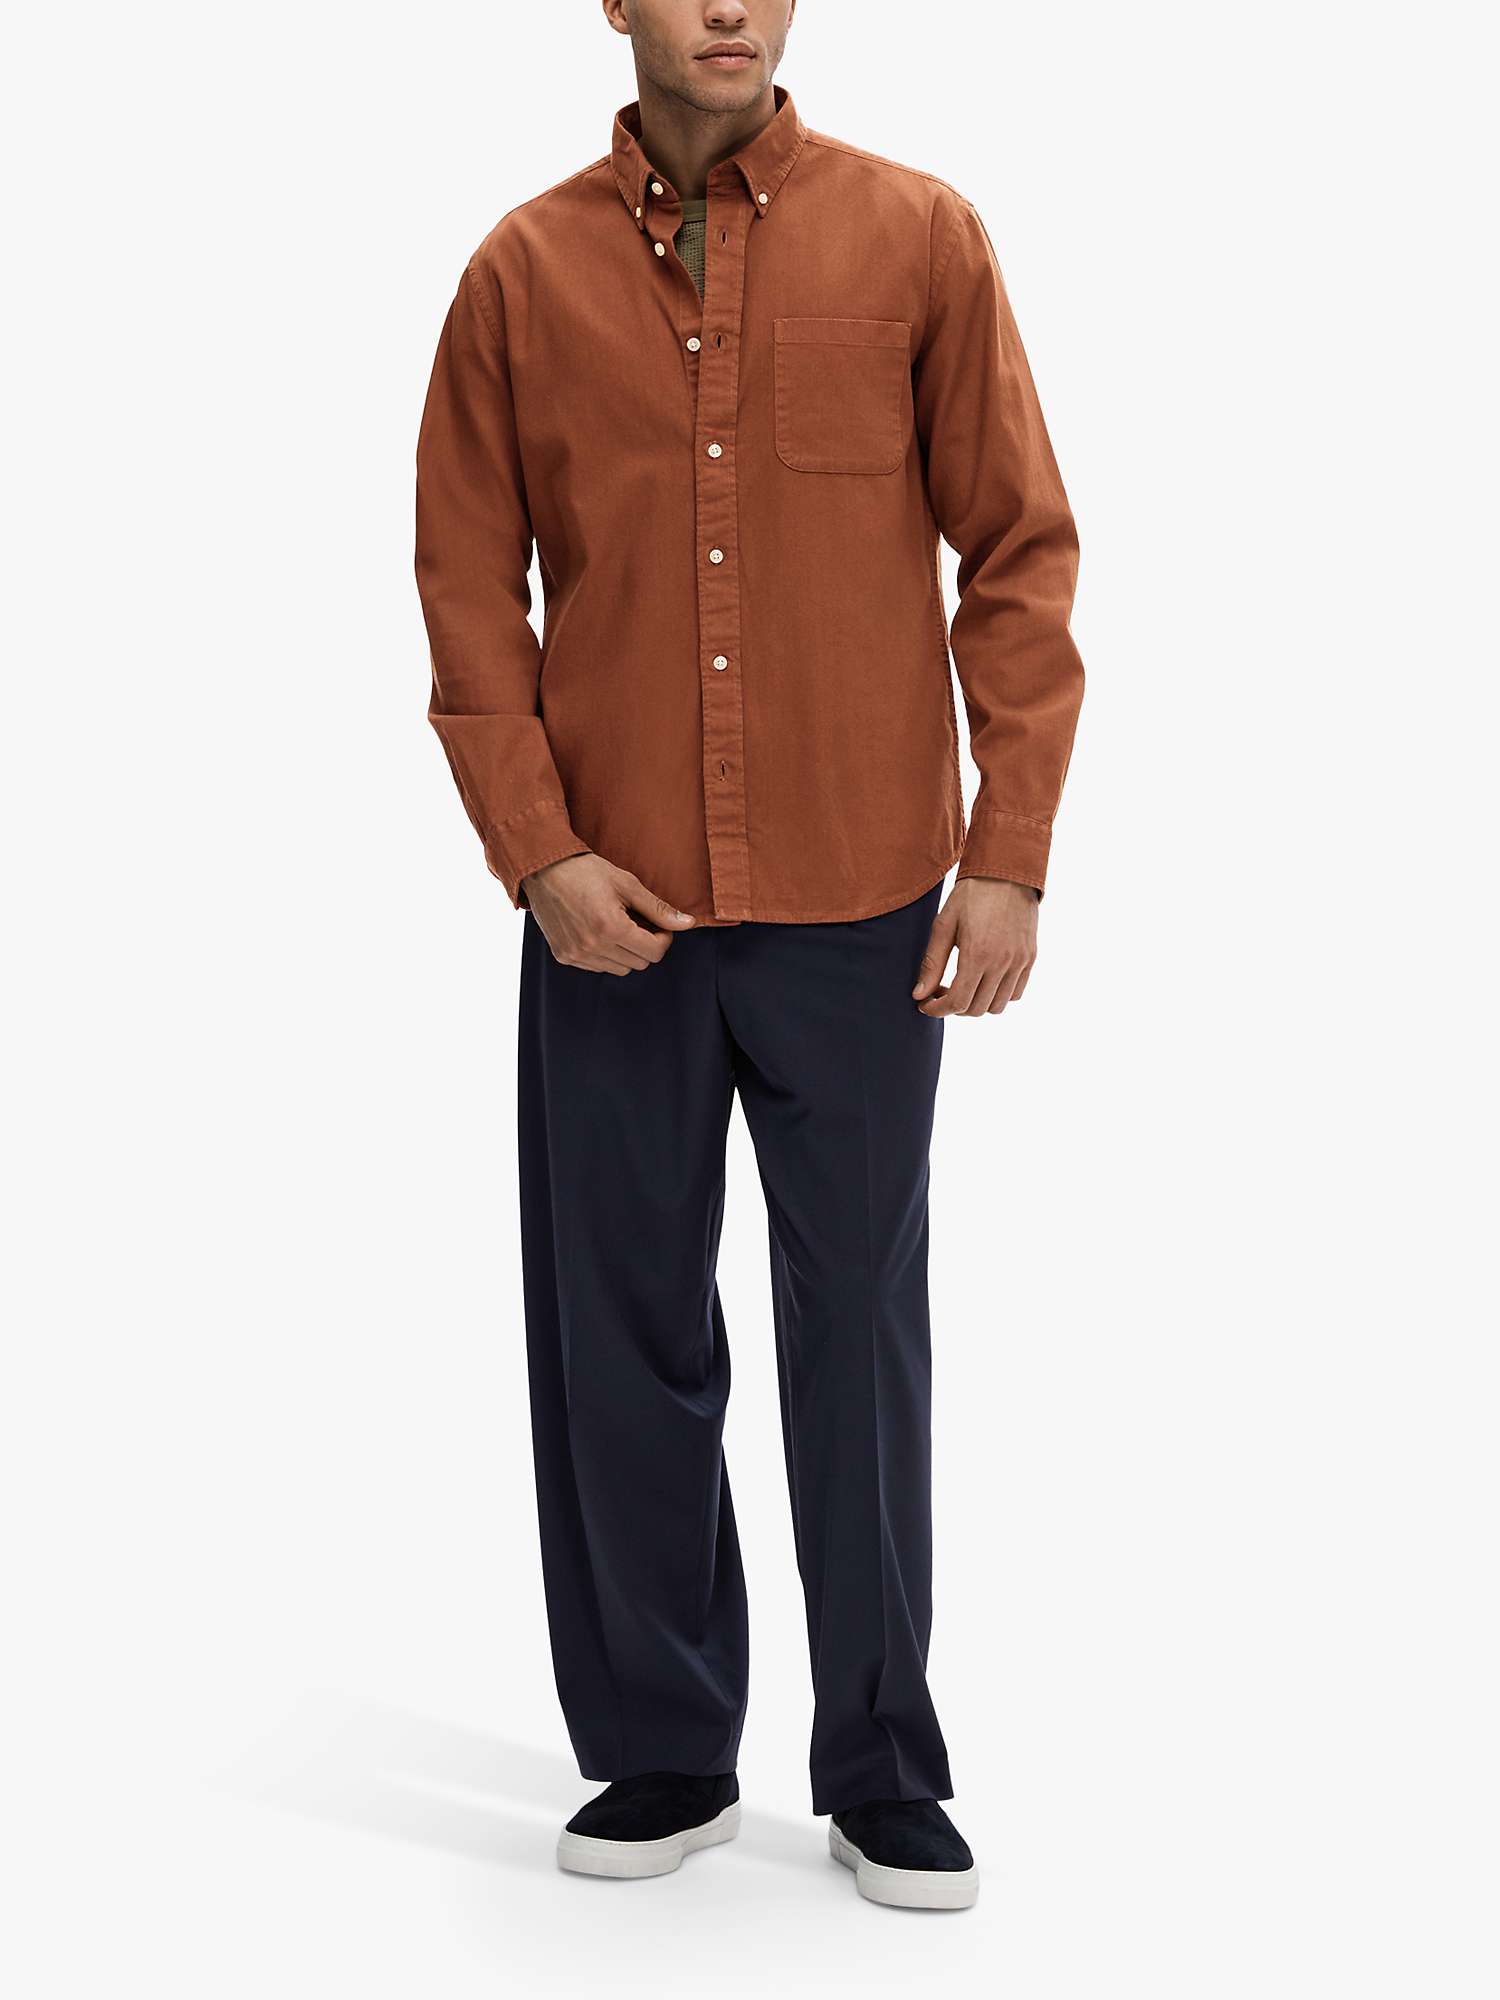 Buy SELECTED HOMME Long Sleeve Denim Shirt, Cherry Online at johnlewis.com